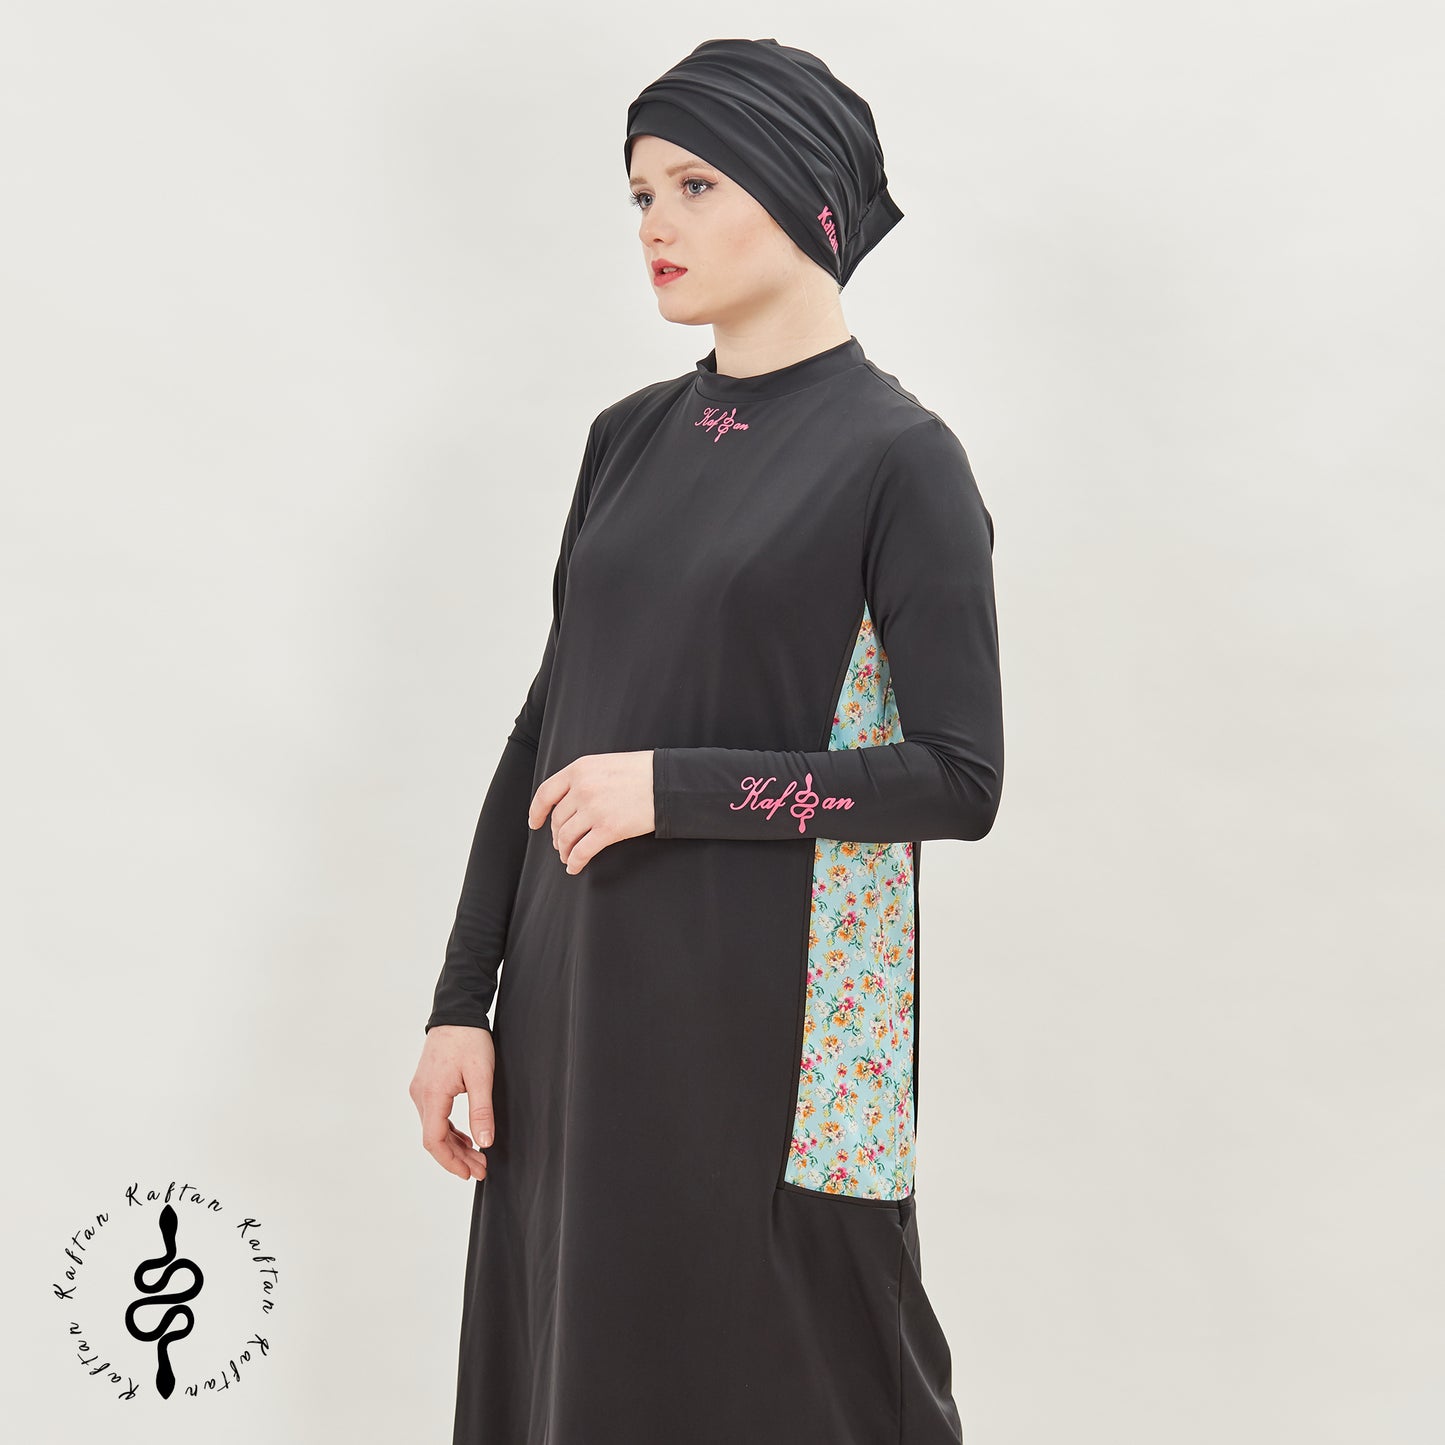 The Maxi-dress Burkini (Black)